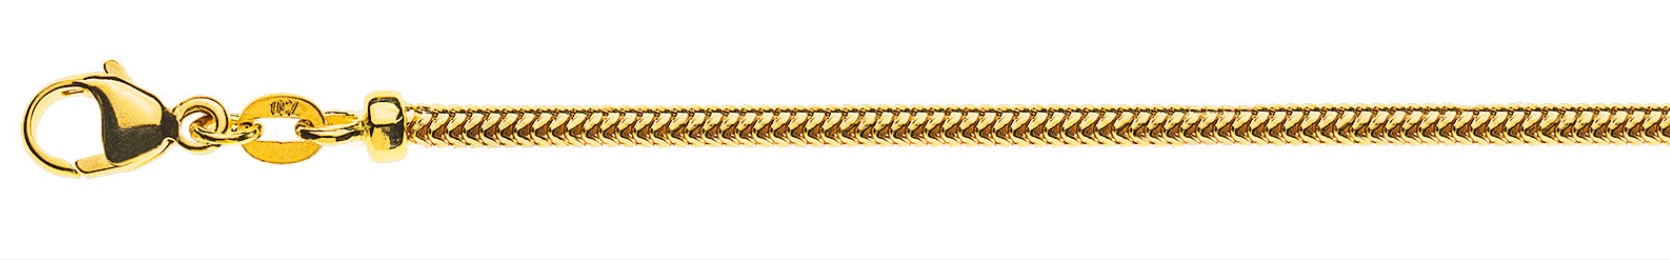 AURONOS Prestige Collier en or jaune 18K serpent 45cm 2.4mm